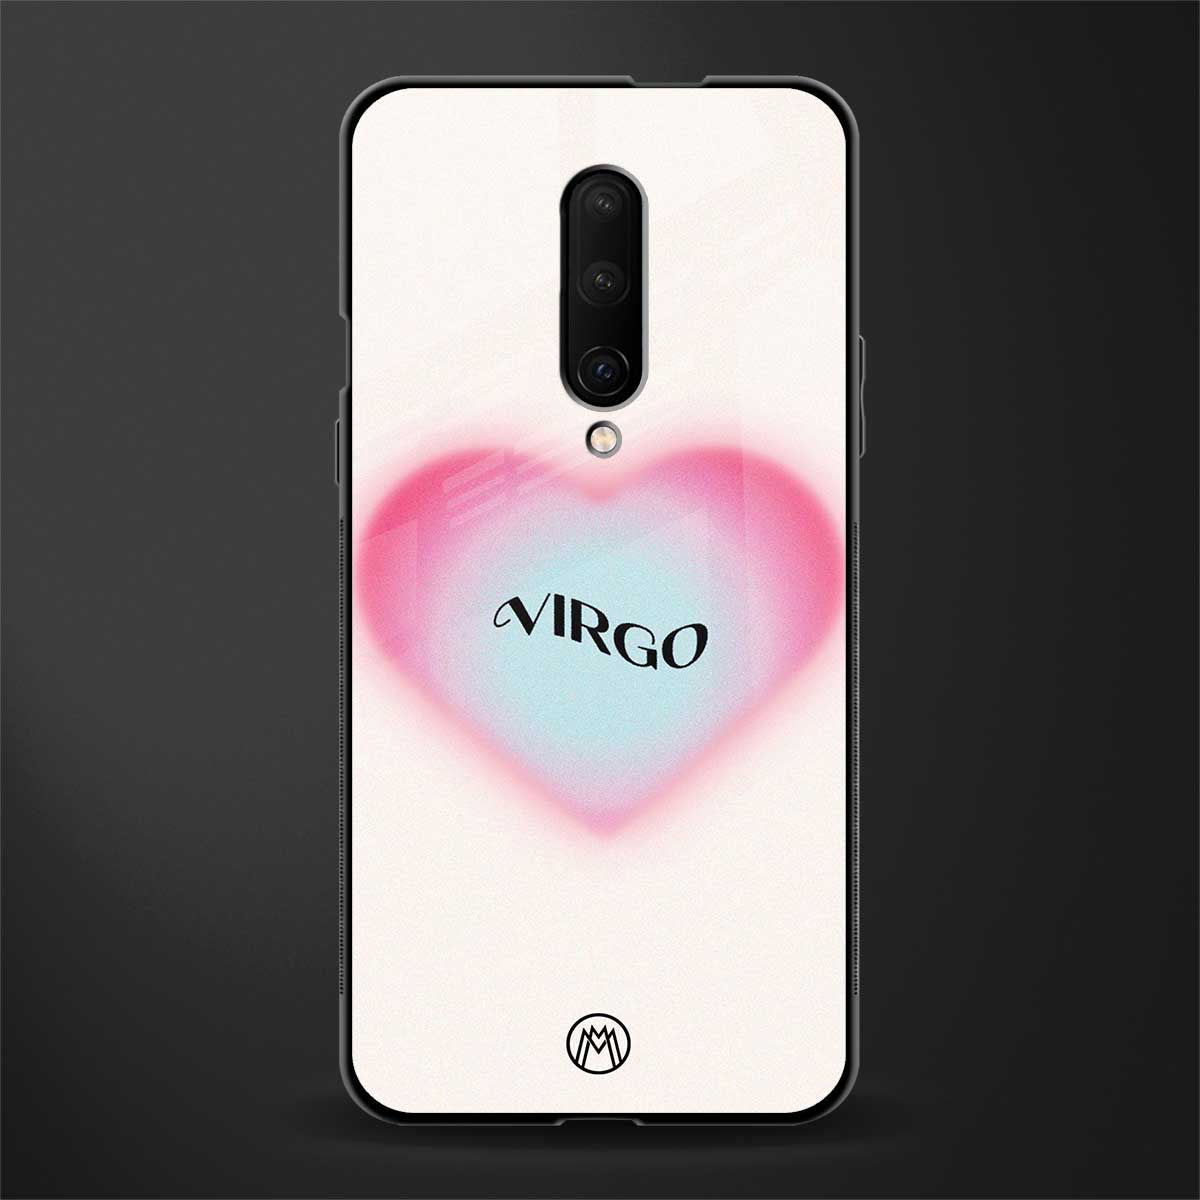 virgo minimalistic glass case for oneplus 7 pro image